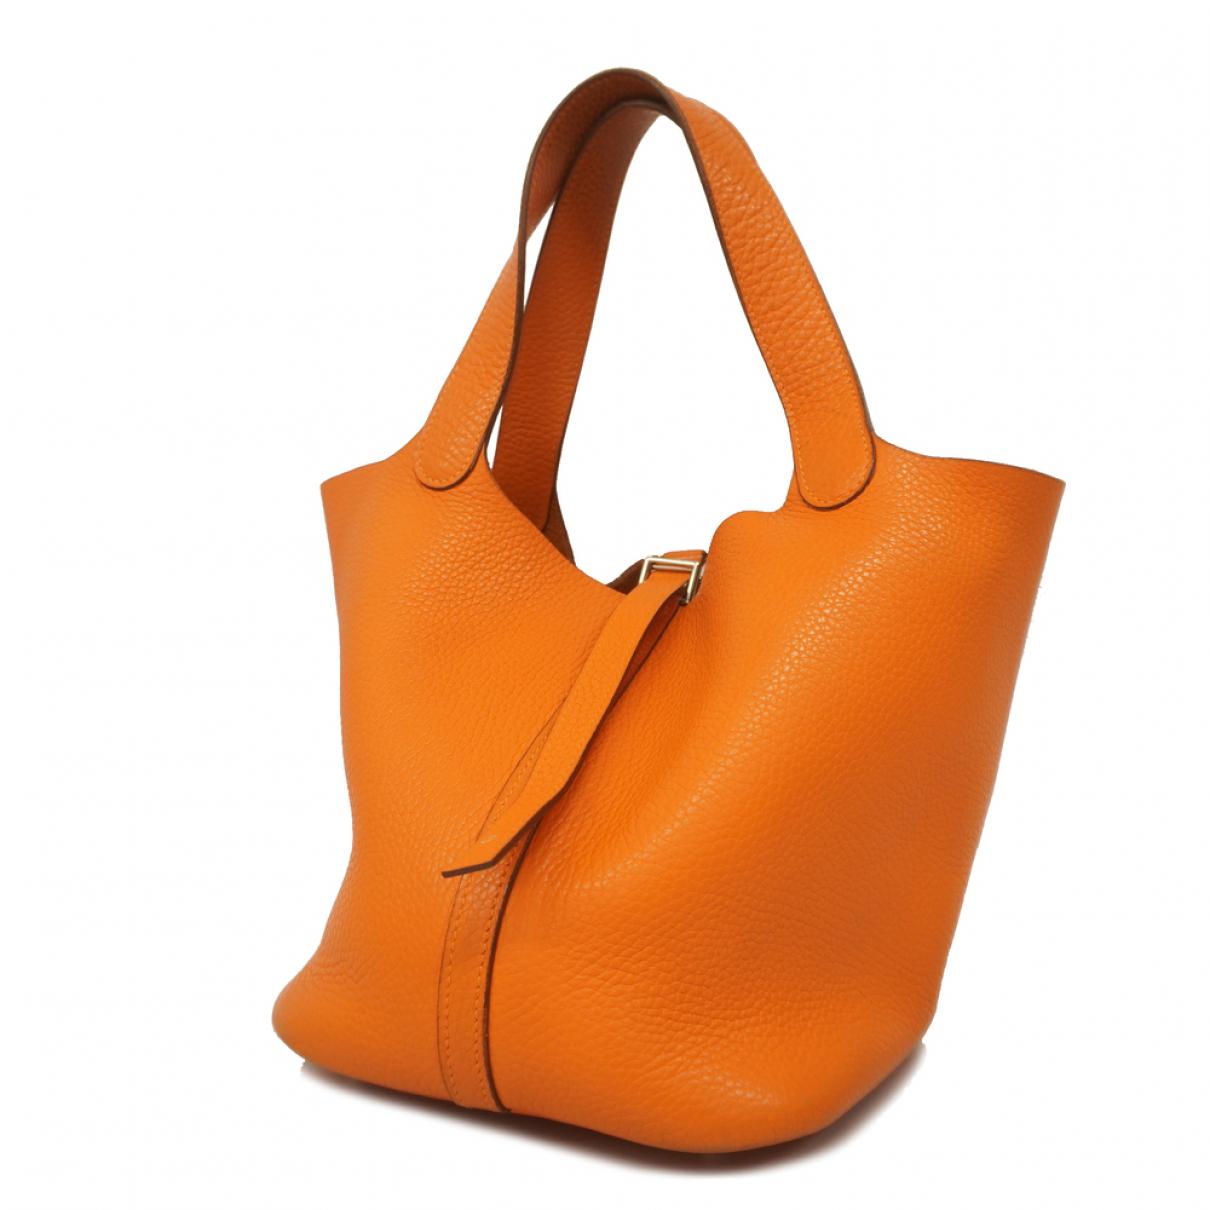 Picotin leather tote Hermès Orange in Leather - 23470503